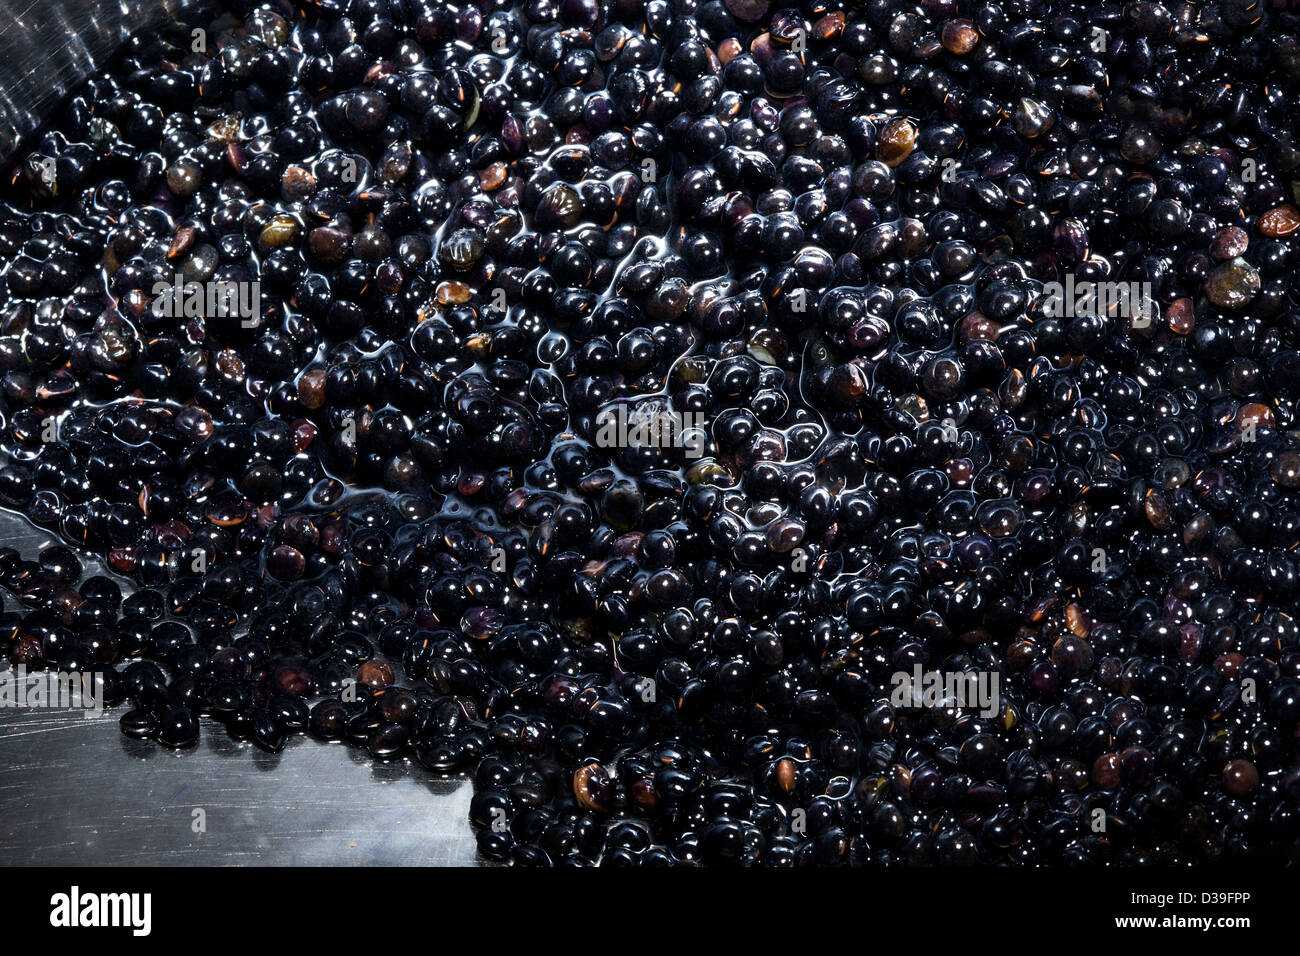 Food BELUGA black darb lentils legumes watered look like caviar deceiving alike Stock Photo